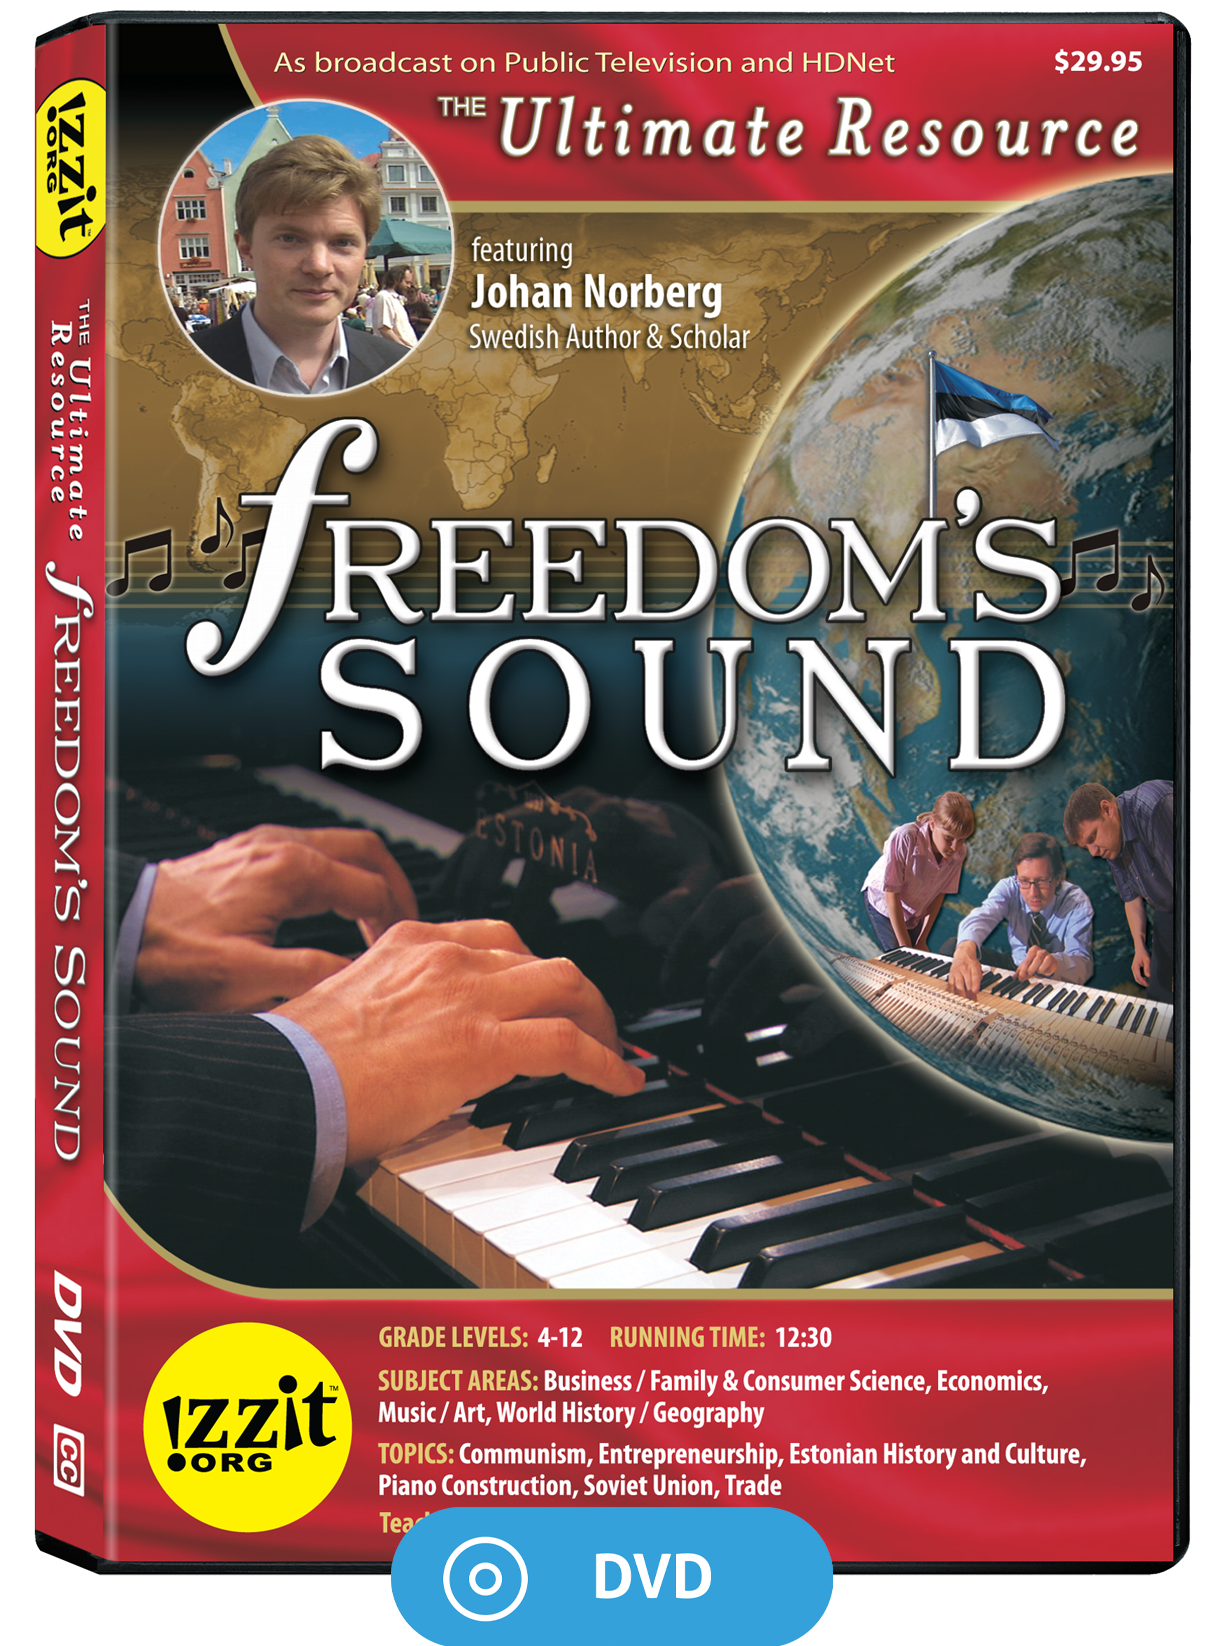 Freedom's Sound DVD